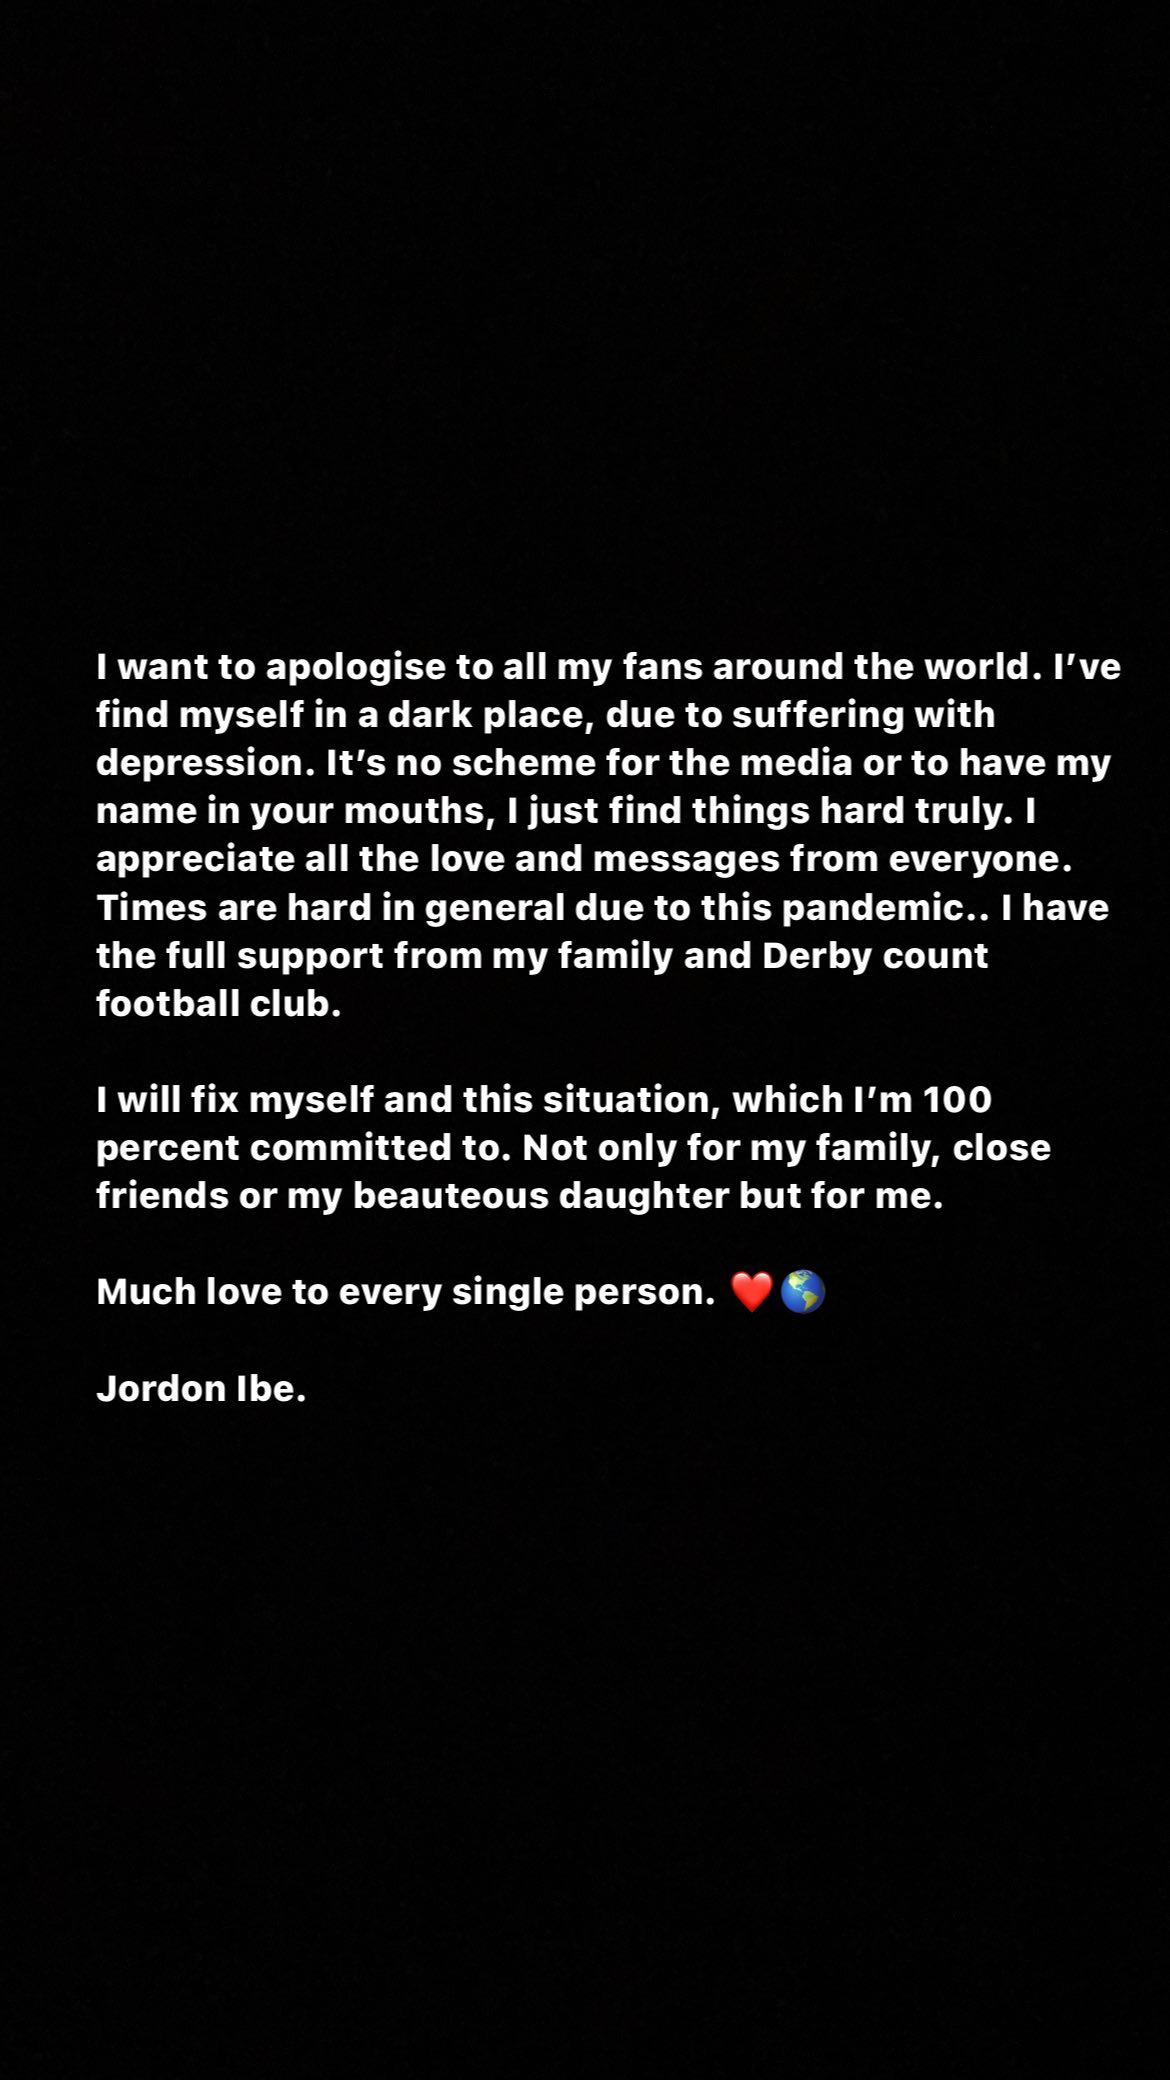 Jordan Ibe's Instagram story